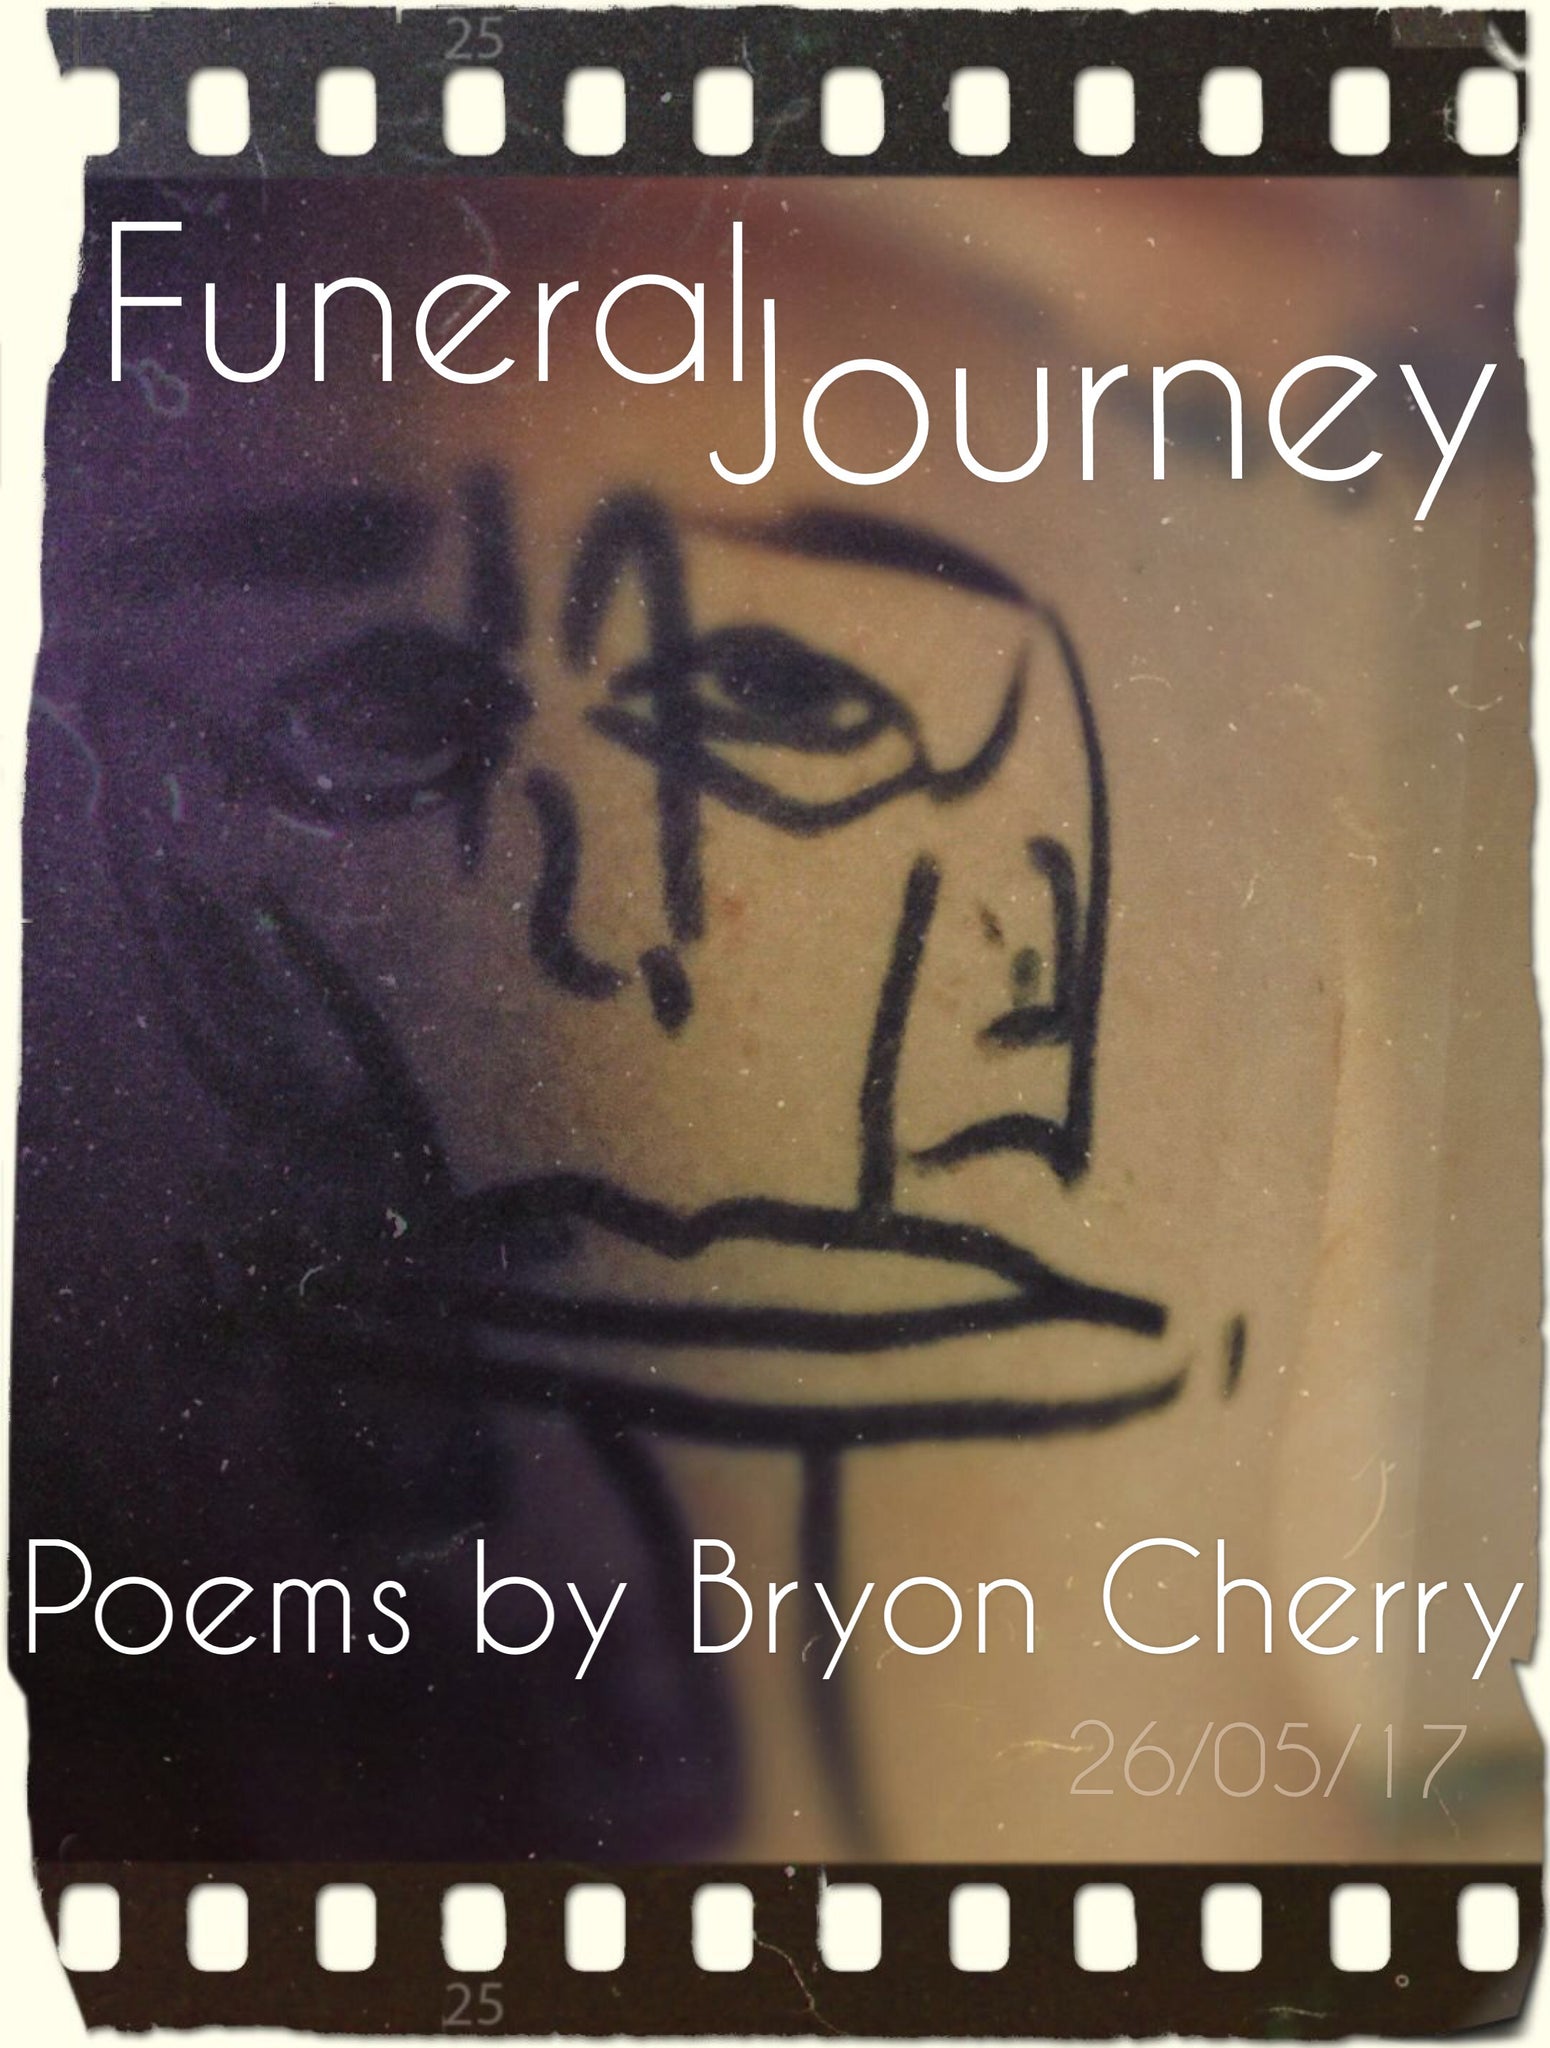 Funeral Journey